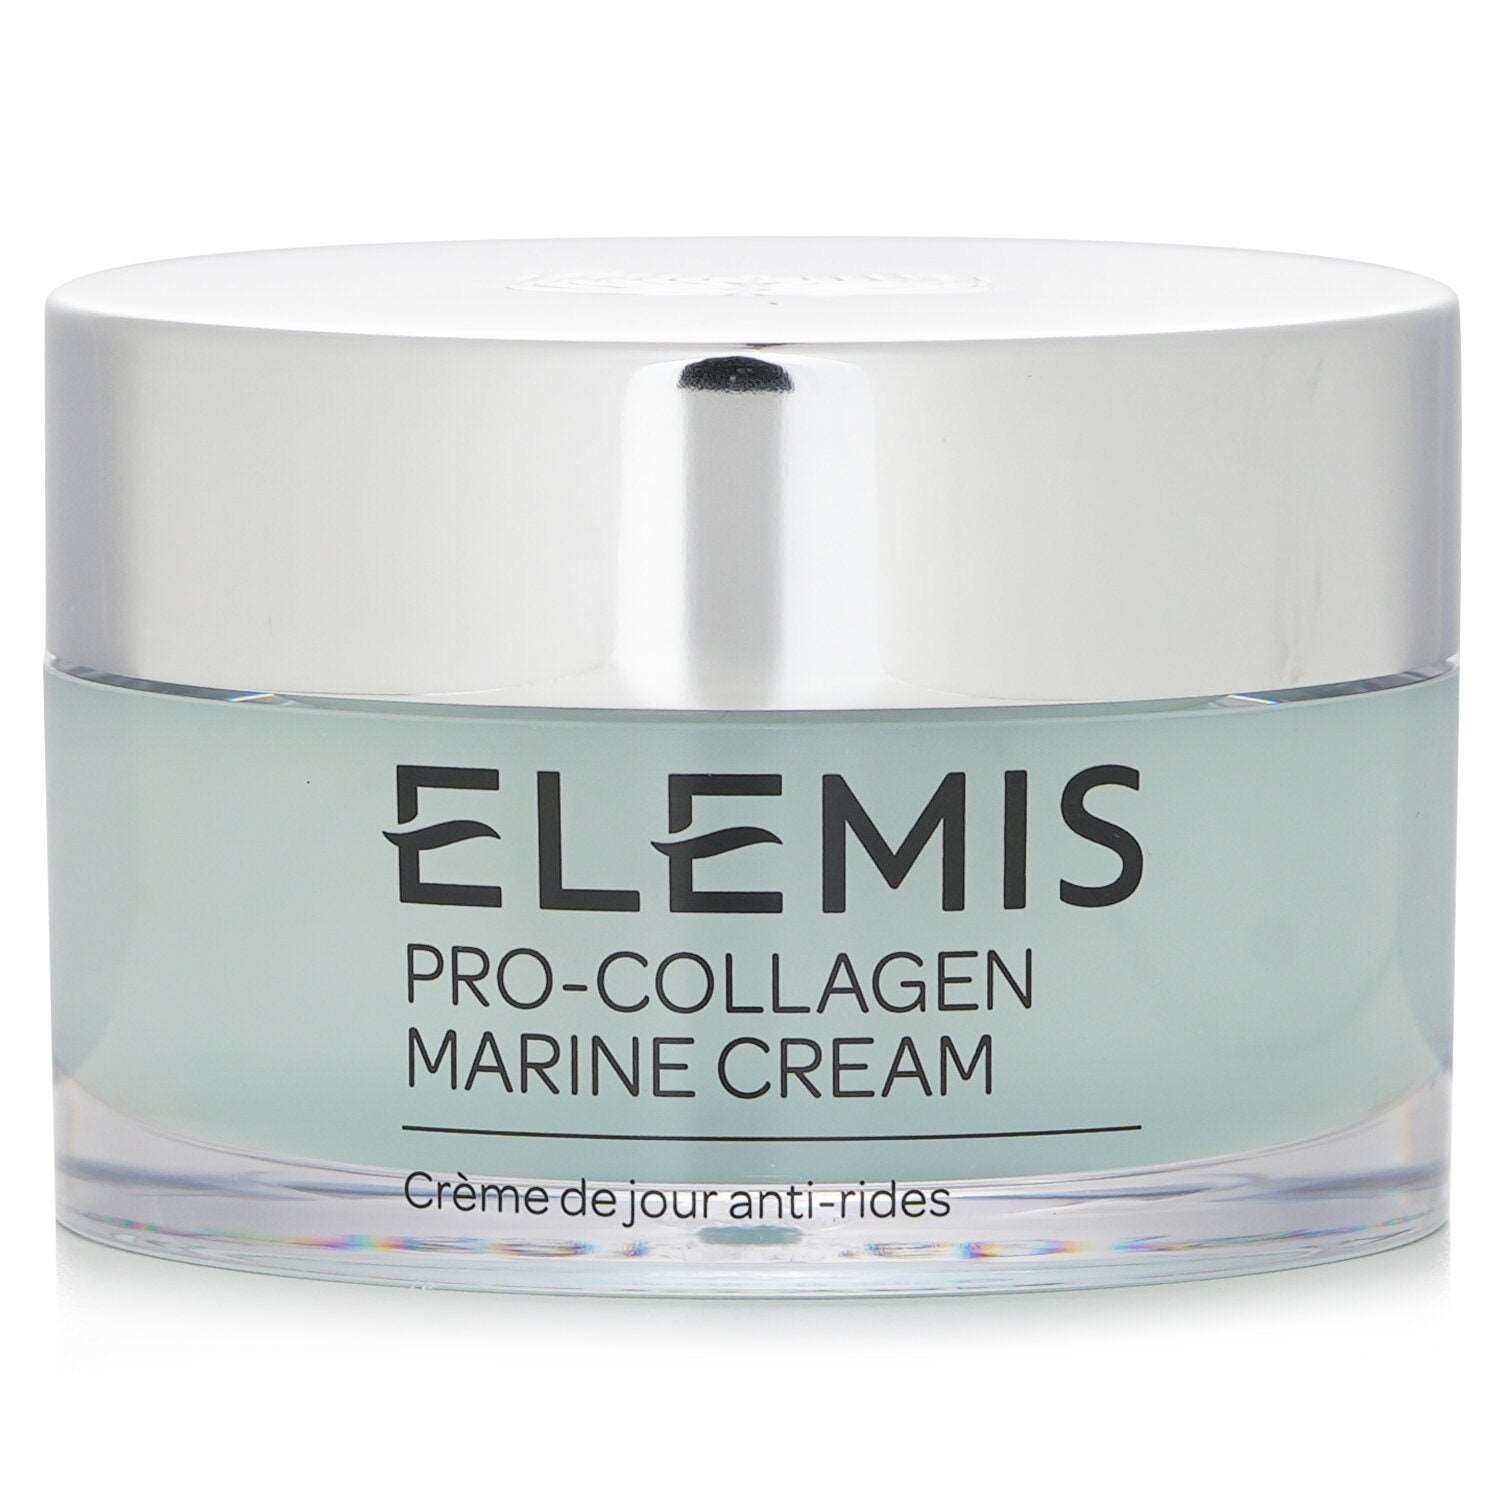 Elemis - Pro-Collagen Marine Cream - 50ml/1.7oz~3P's Inclusive Beauty